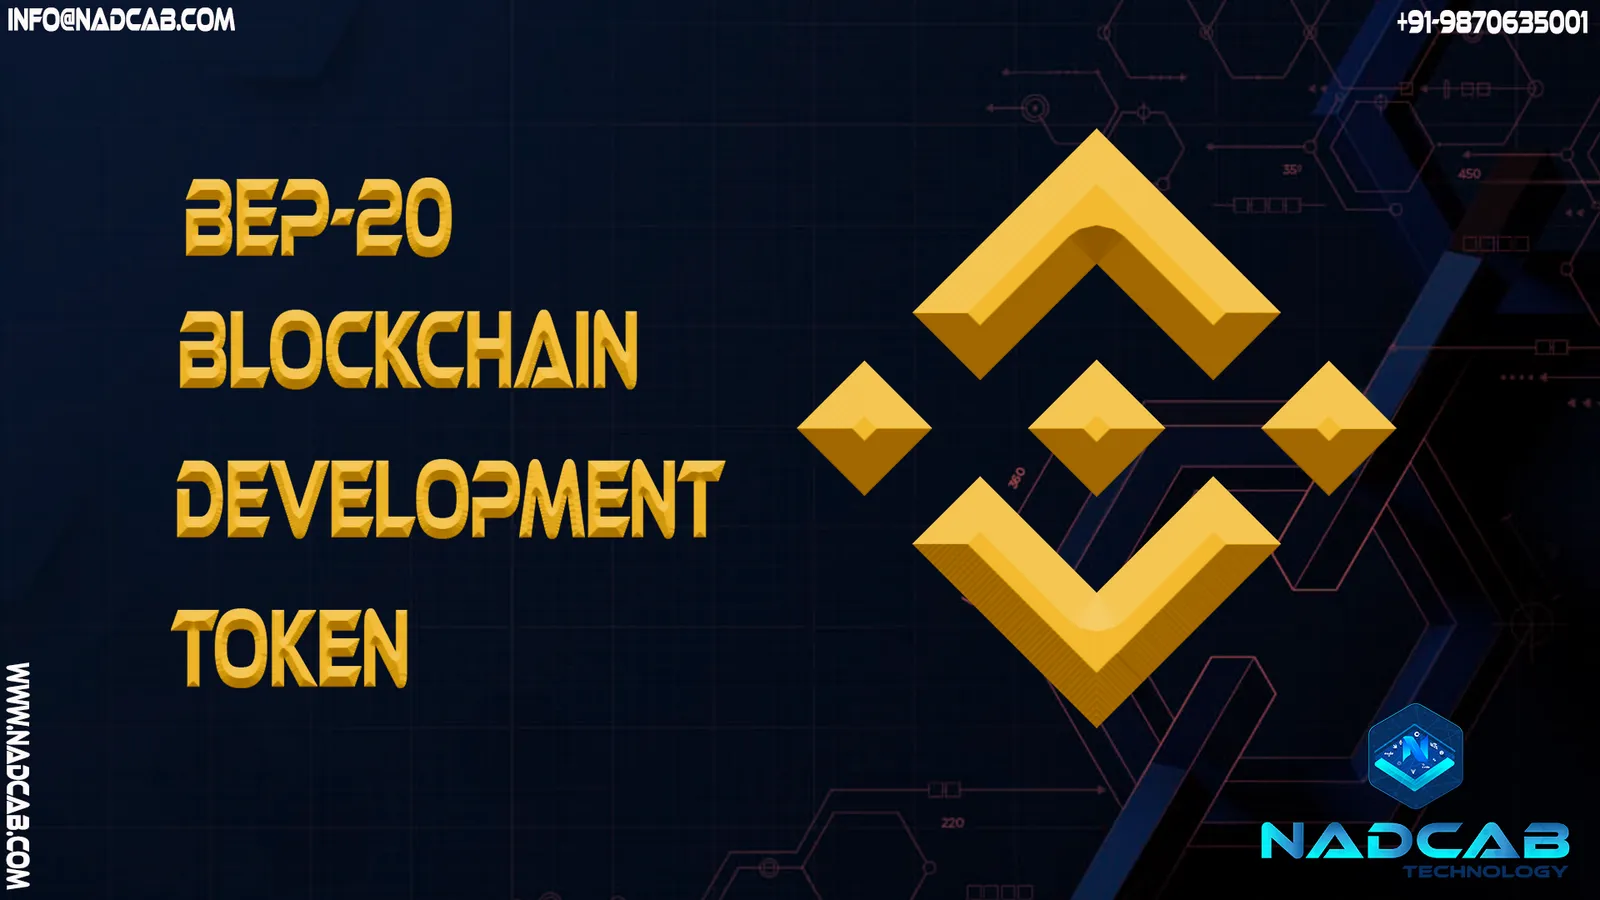 Bep-20 Blockchain Token